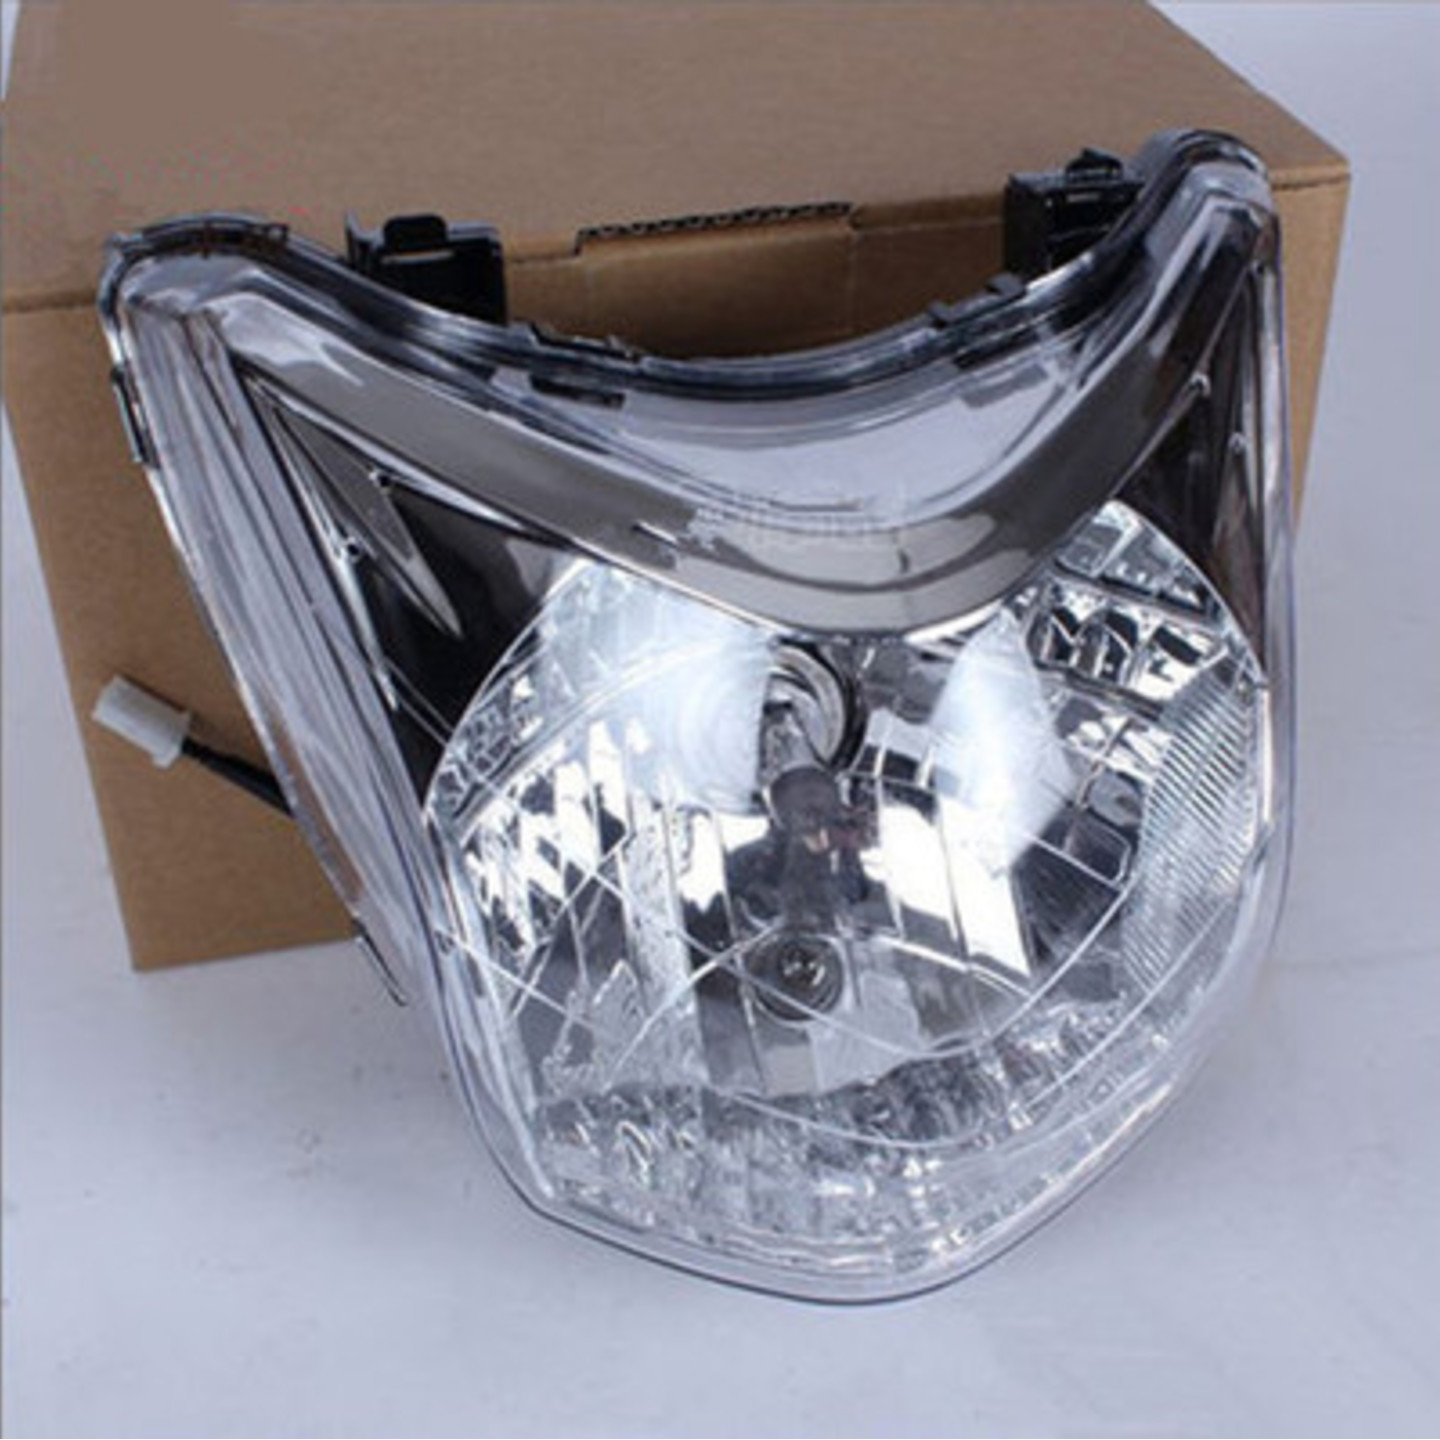 Honda RR150 Headlight front head light assembly 